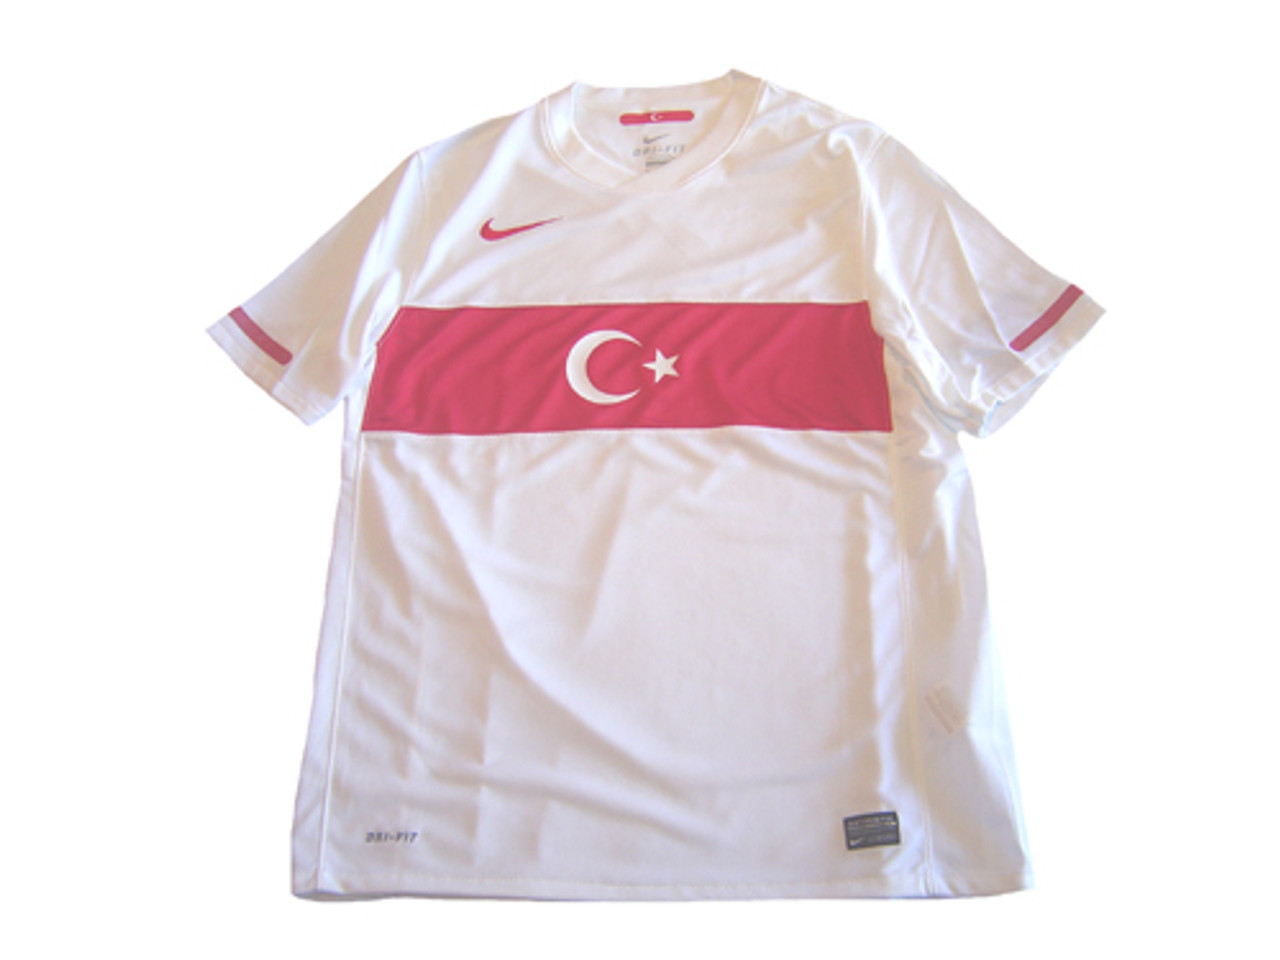 Geladen huichelarij huurder NIKE TURKEY 2010 AWAY JERSEY WHITE - Soccer Plus